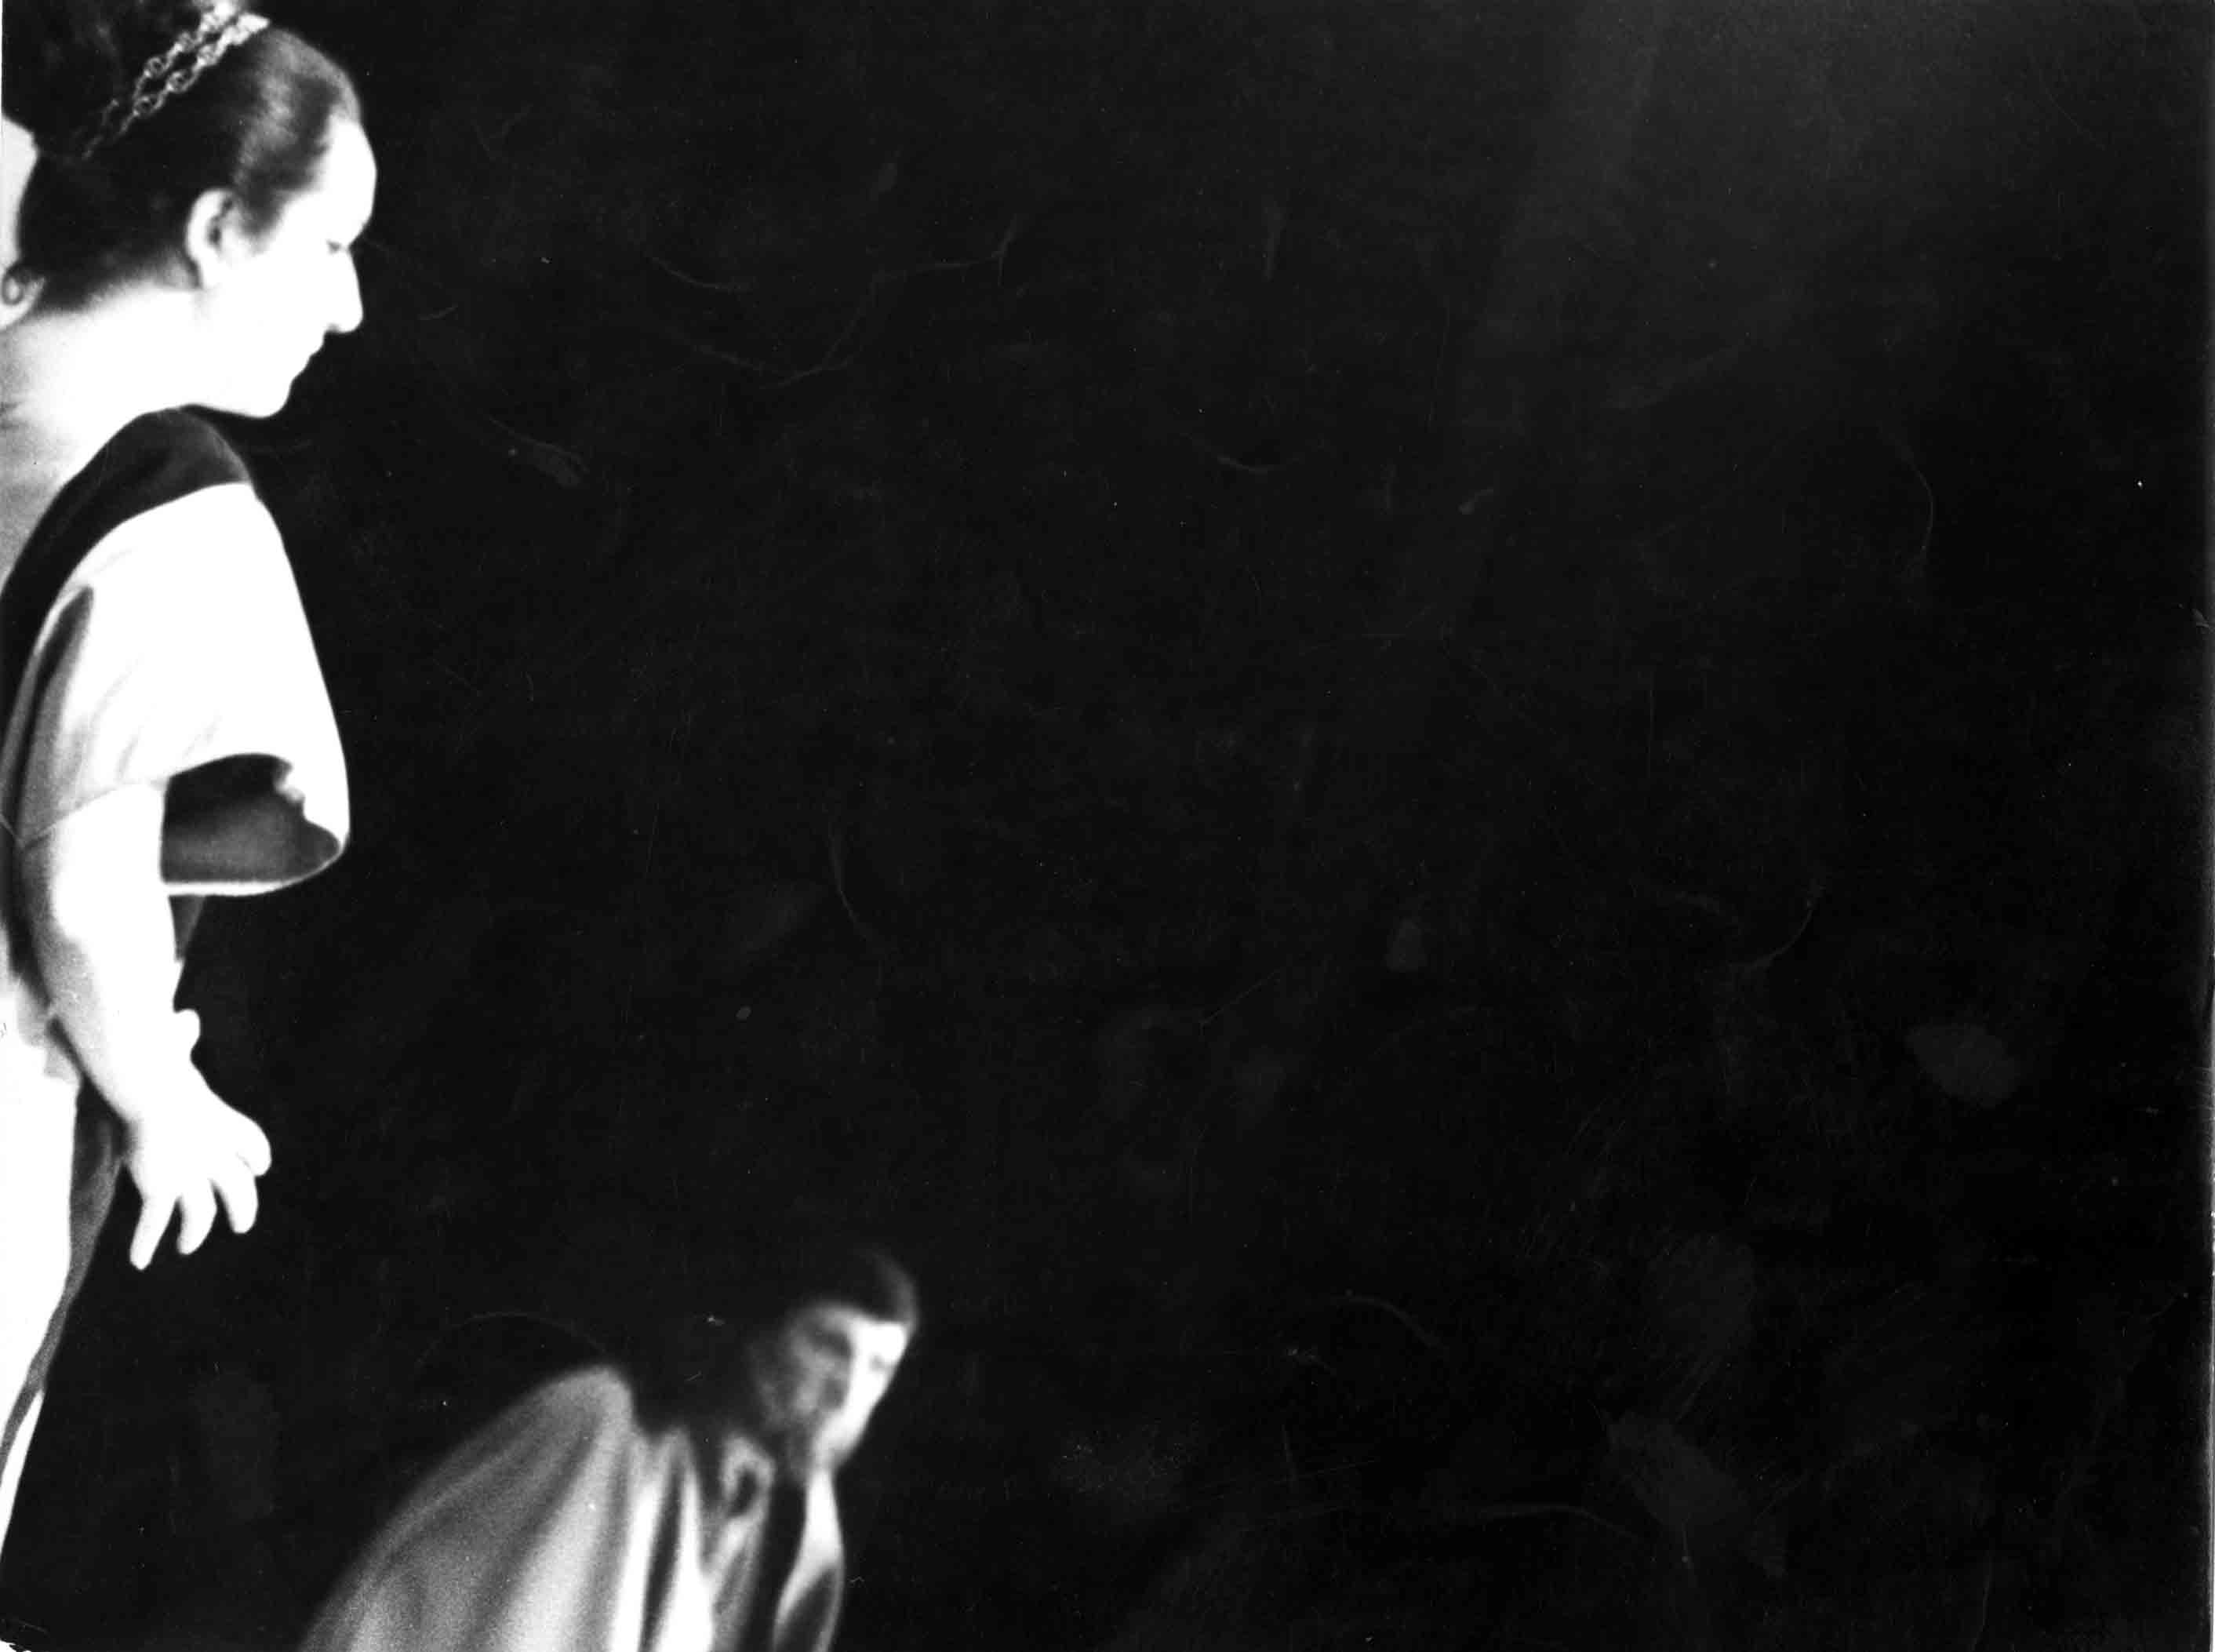 Fotografia. Pau Barceló. Primera història d'Esther. Camerins Teatre Romea, 1968